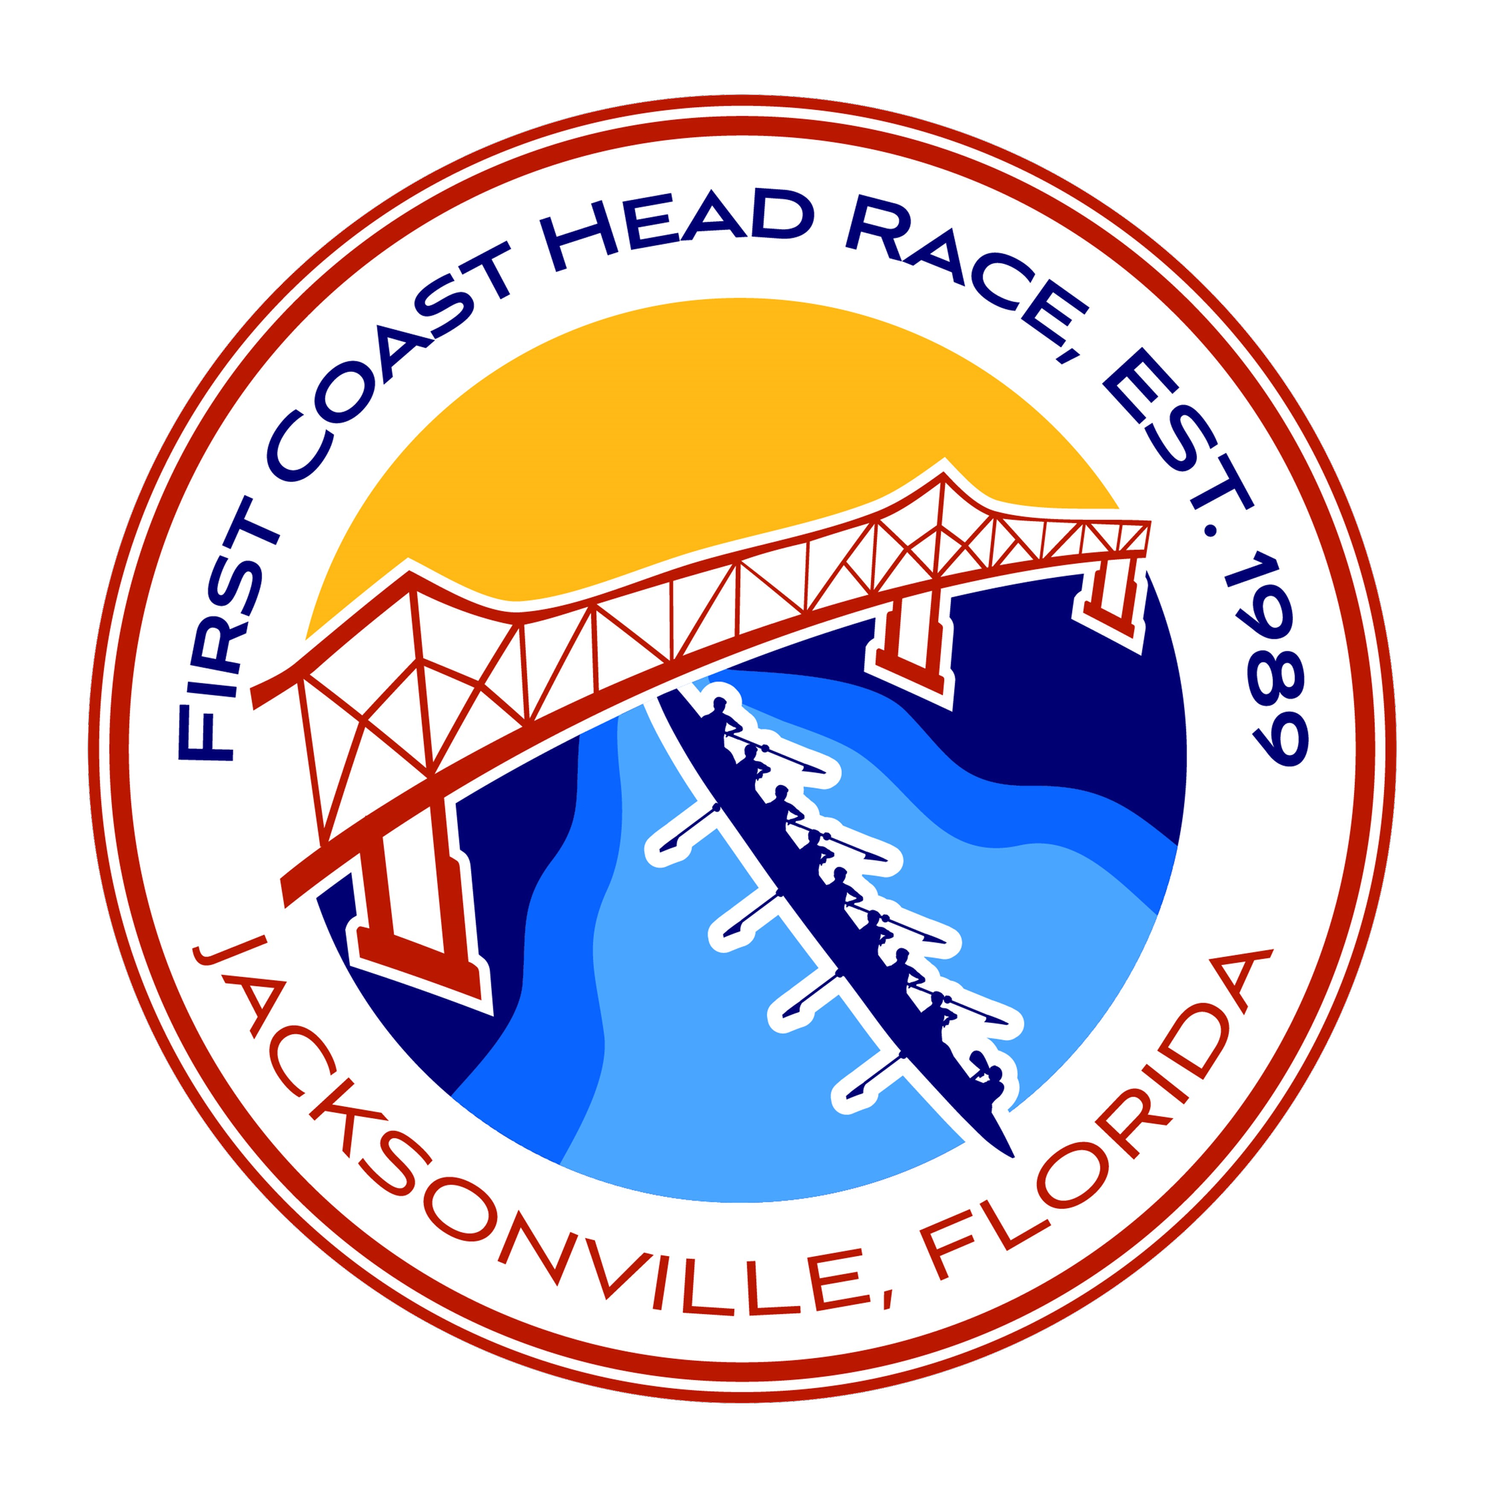 First Coast Head Race